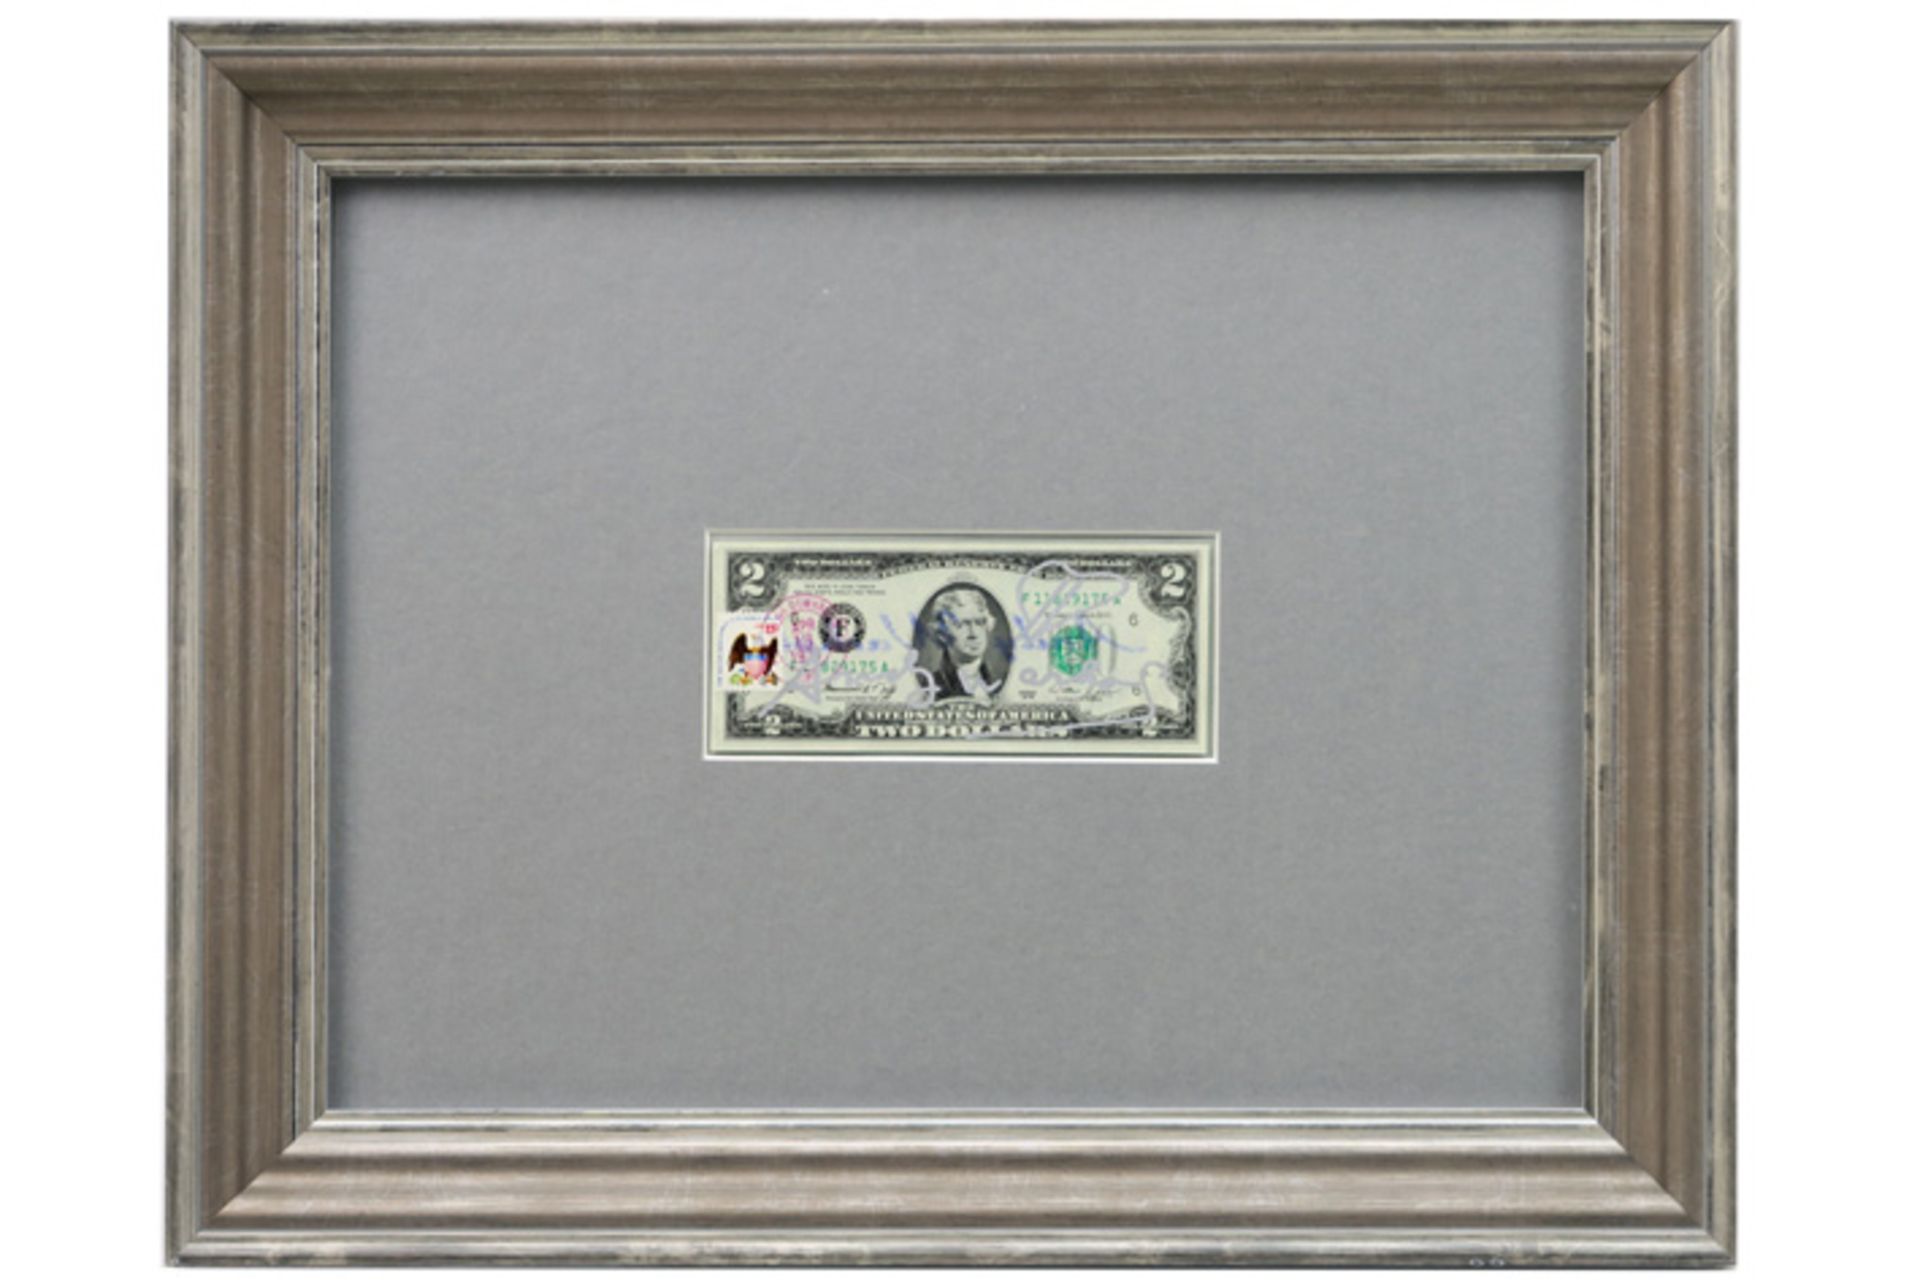 WARHOL ANDY (1930 - 1987) handgesigneerd twee dollar bankbiljet - ingekaderd||Andy Warhol handsigned - Image 3 of 4